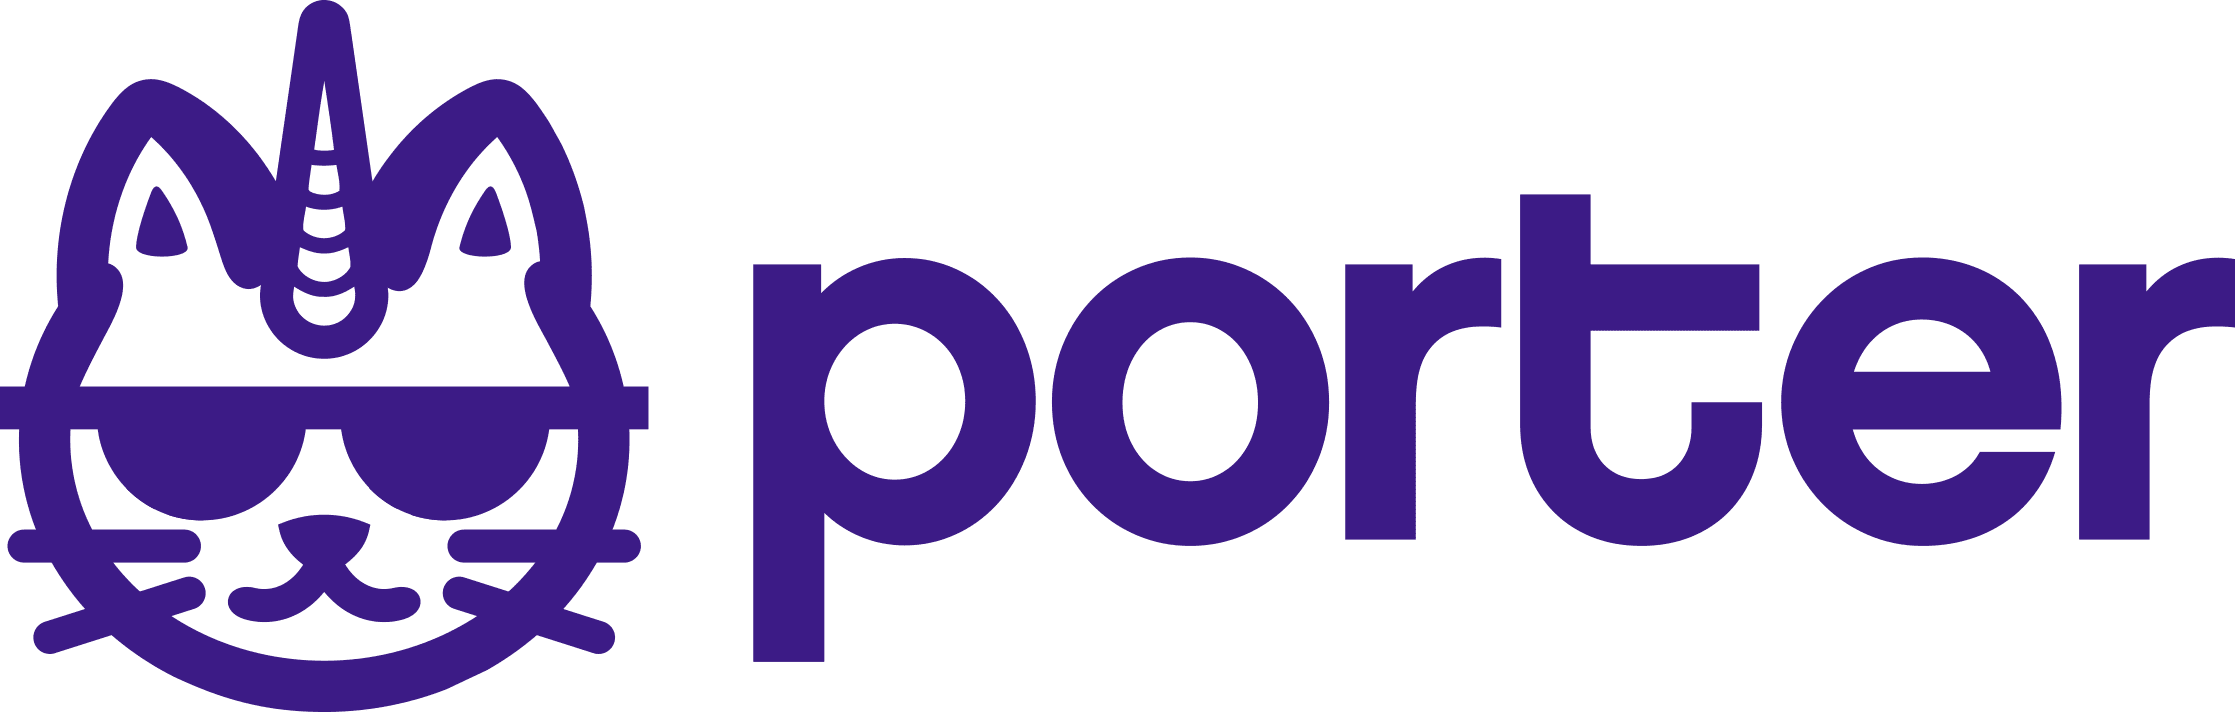 porter logo - supermetrics alternatives